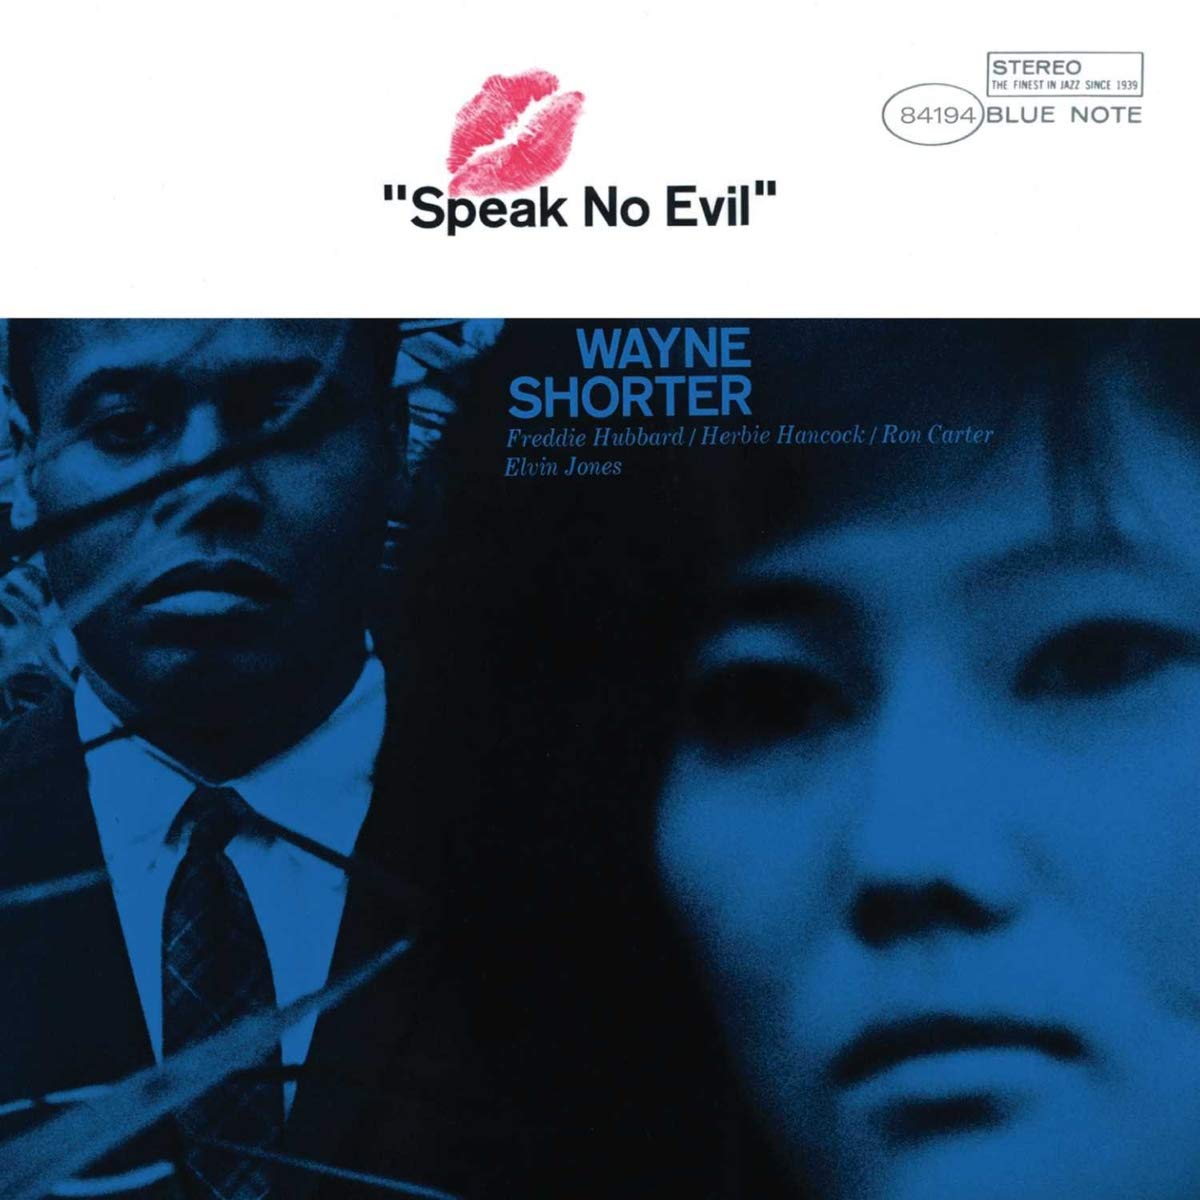 Wayne Shorter "Speak No Evil"  [All Analog 180g Reissue Vinyl][Classic Blue Note Series]